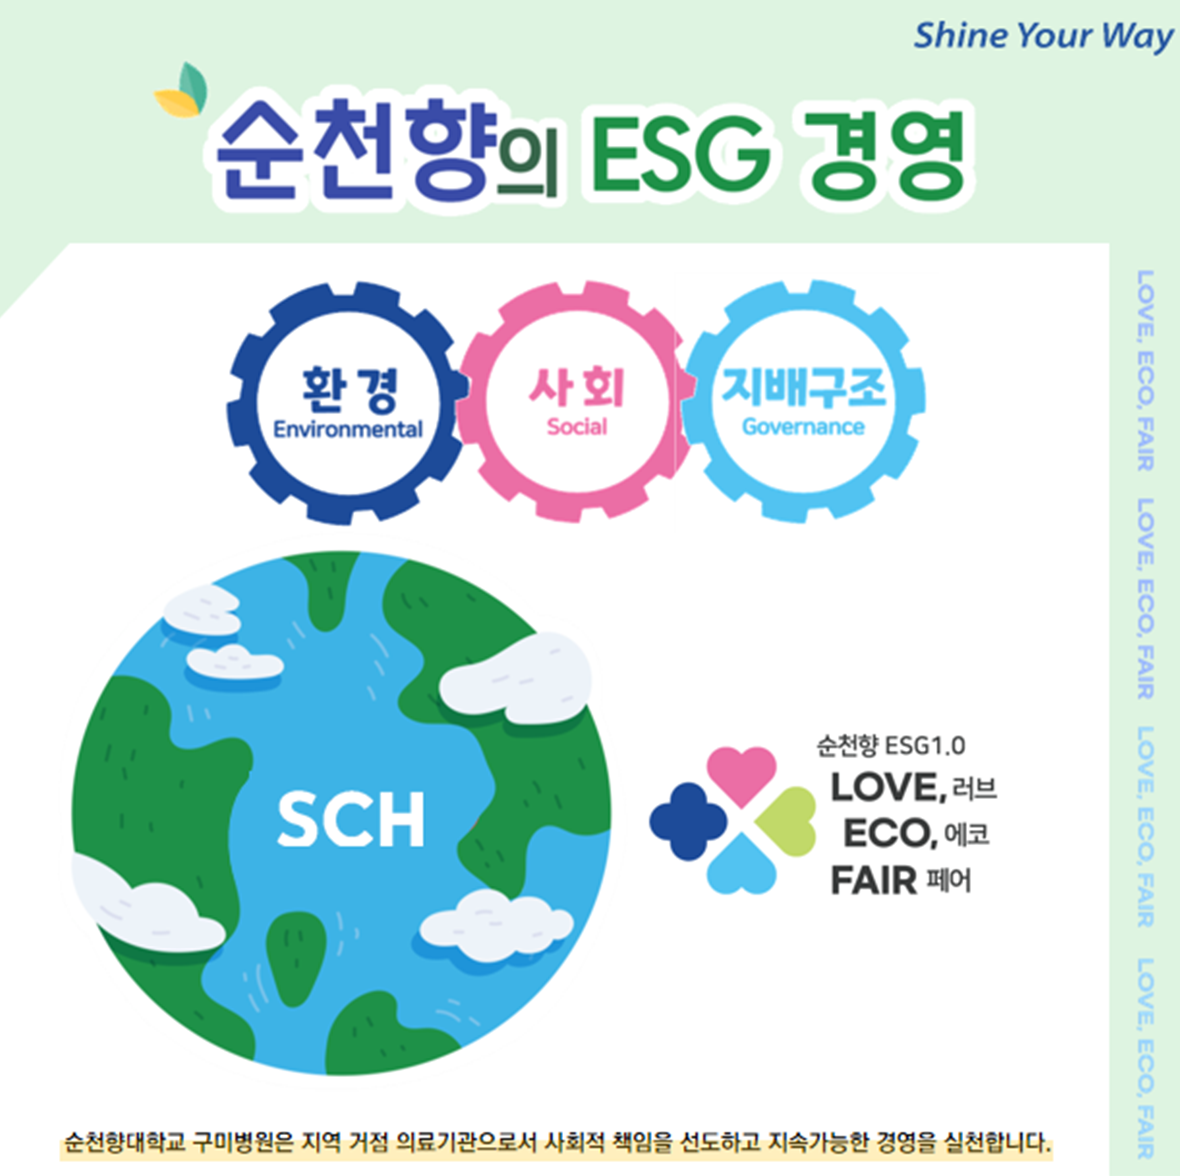 Shine Your Way 순천향의 ESG 경영 환경 Environmental 사회 Social 지배구조 Governance
SCH 순천향 ESG1.0 LOVE, 러브 ECO, 에코 FAIR 페어
순천향대학교 구미병원은 지역 거점 의료기관으로서 사회적 책임을 선도하고 지속가능한 경영을 실천합니다.